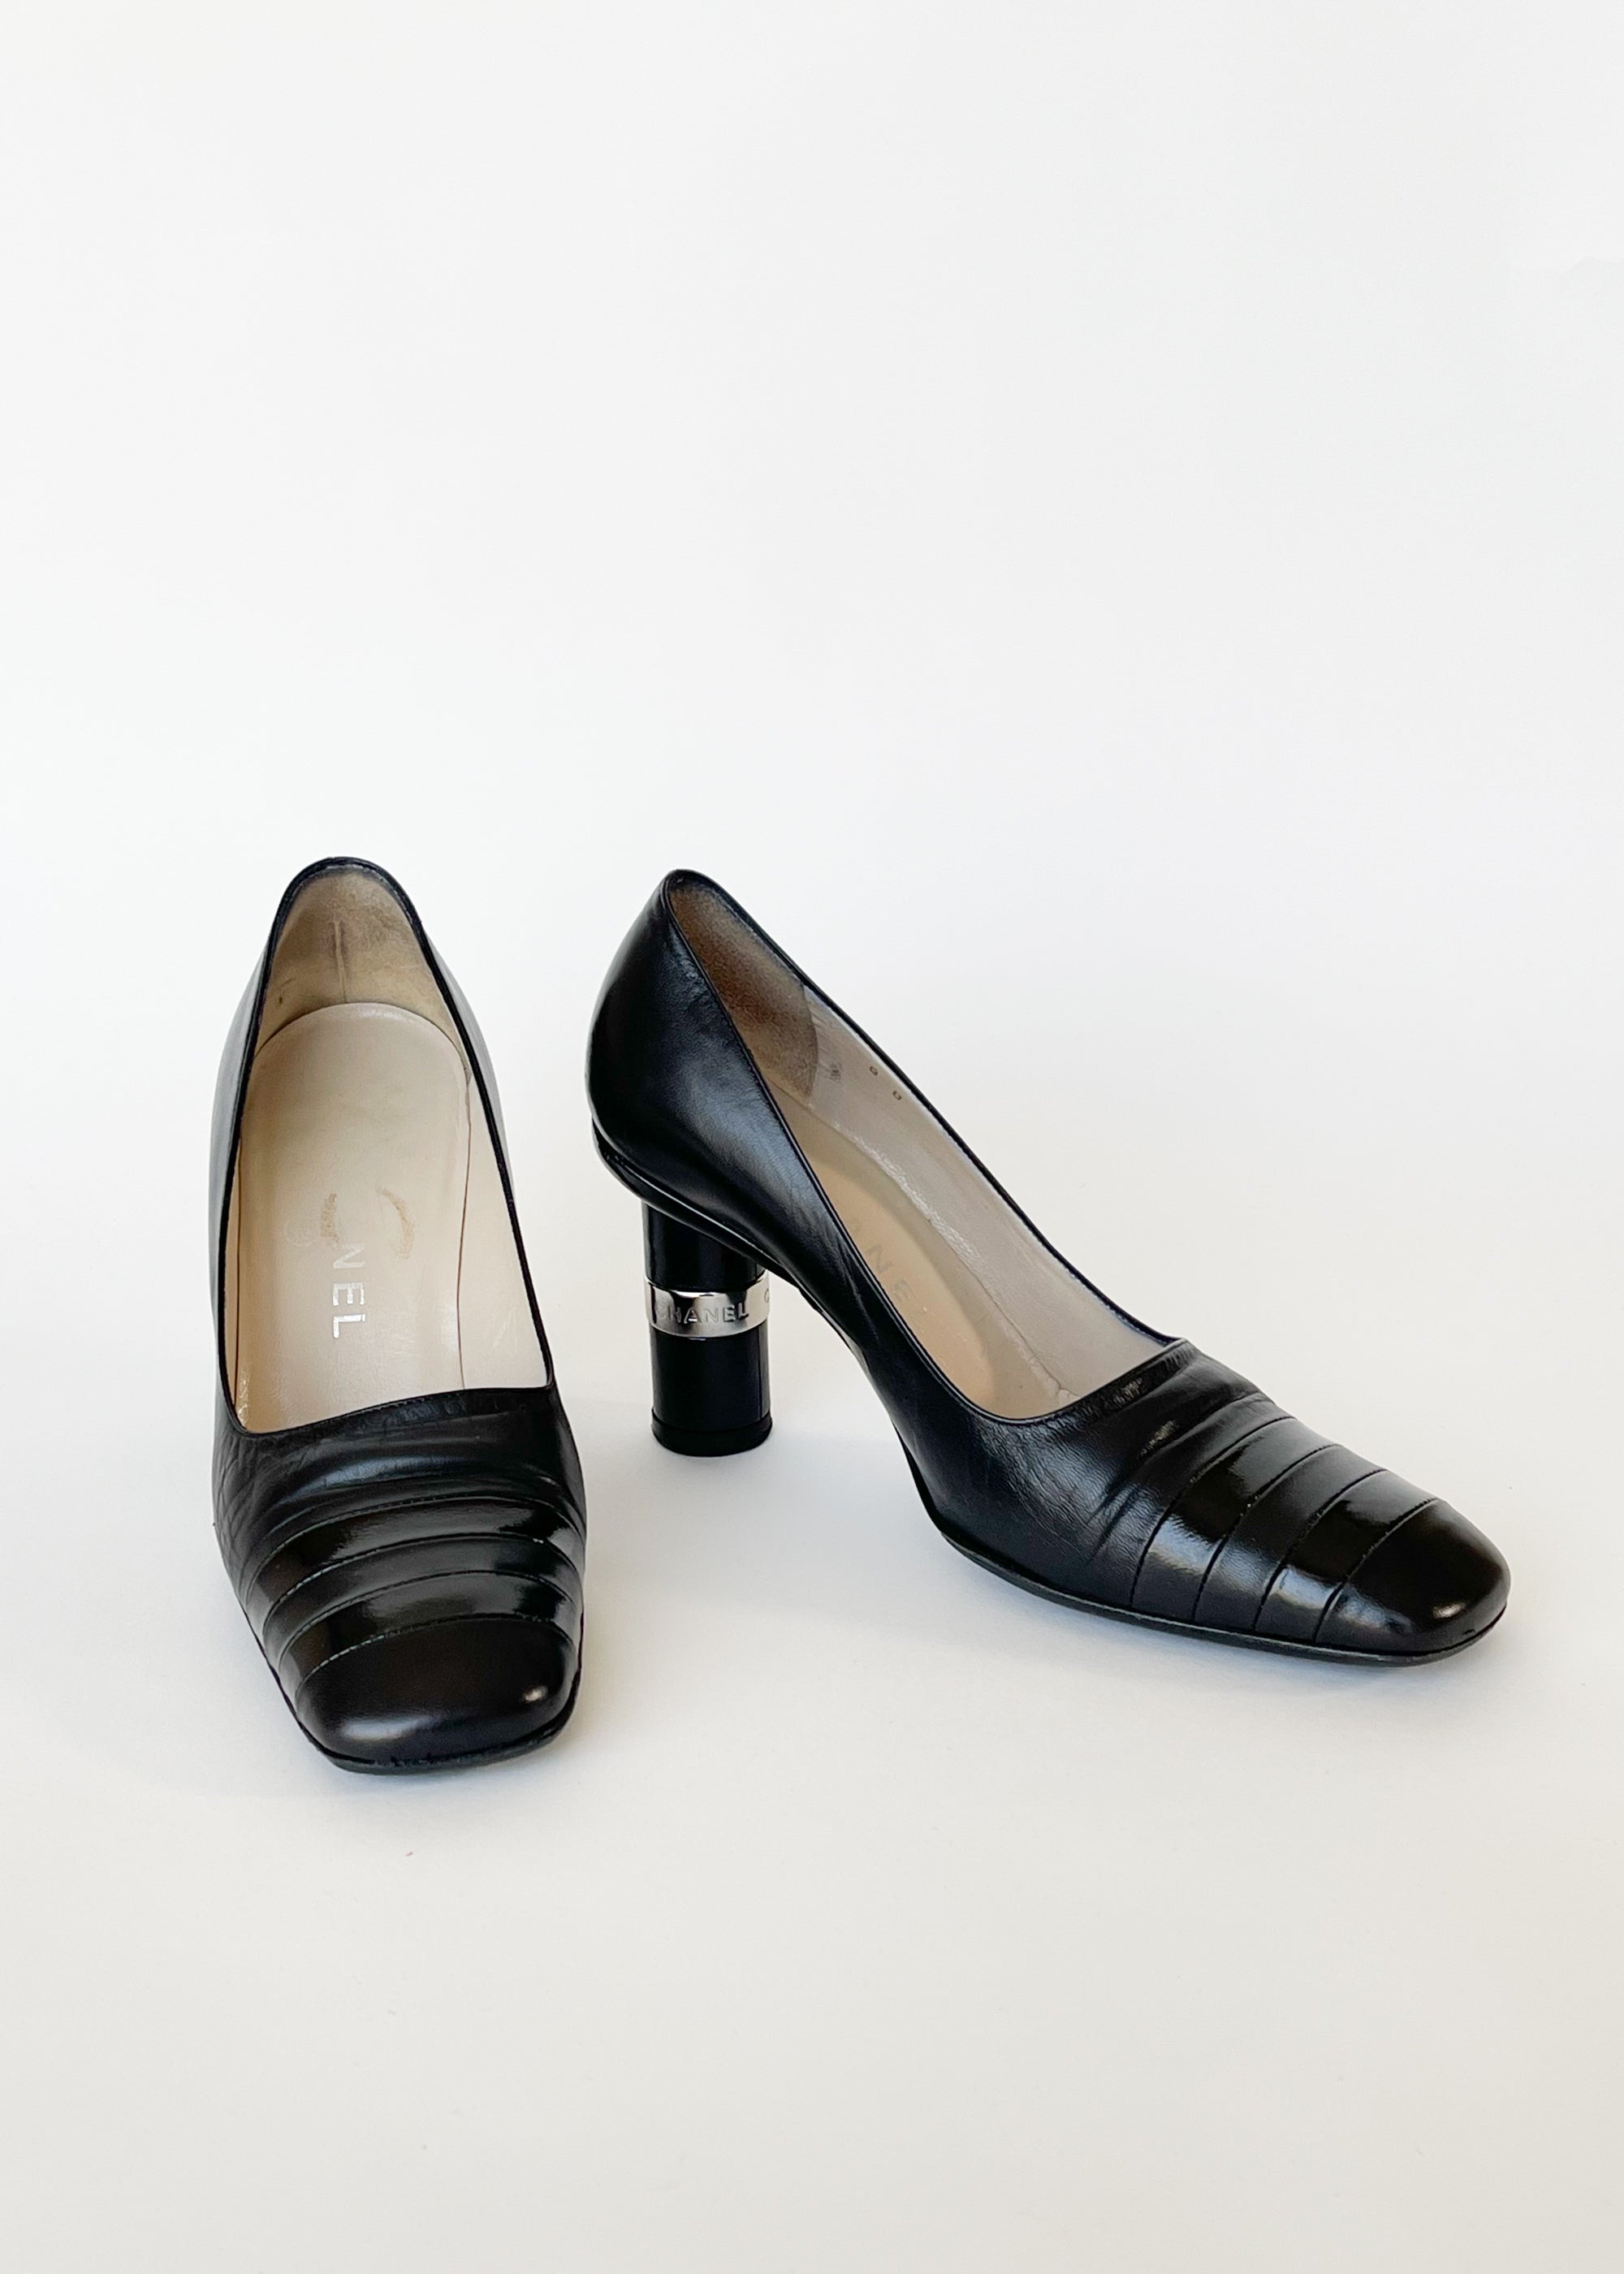 Vintage Chanel Shoes  Bespoke Not Broke